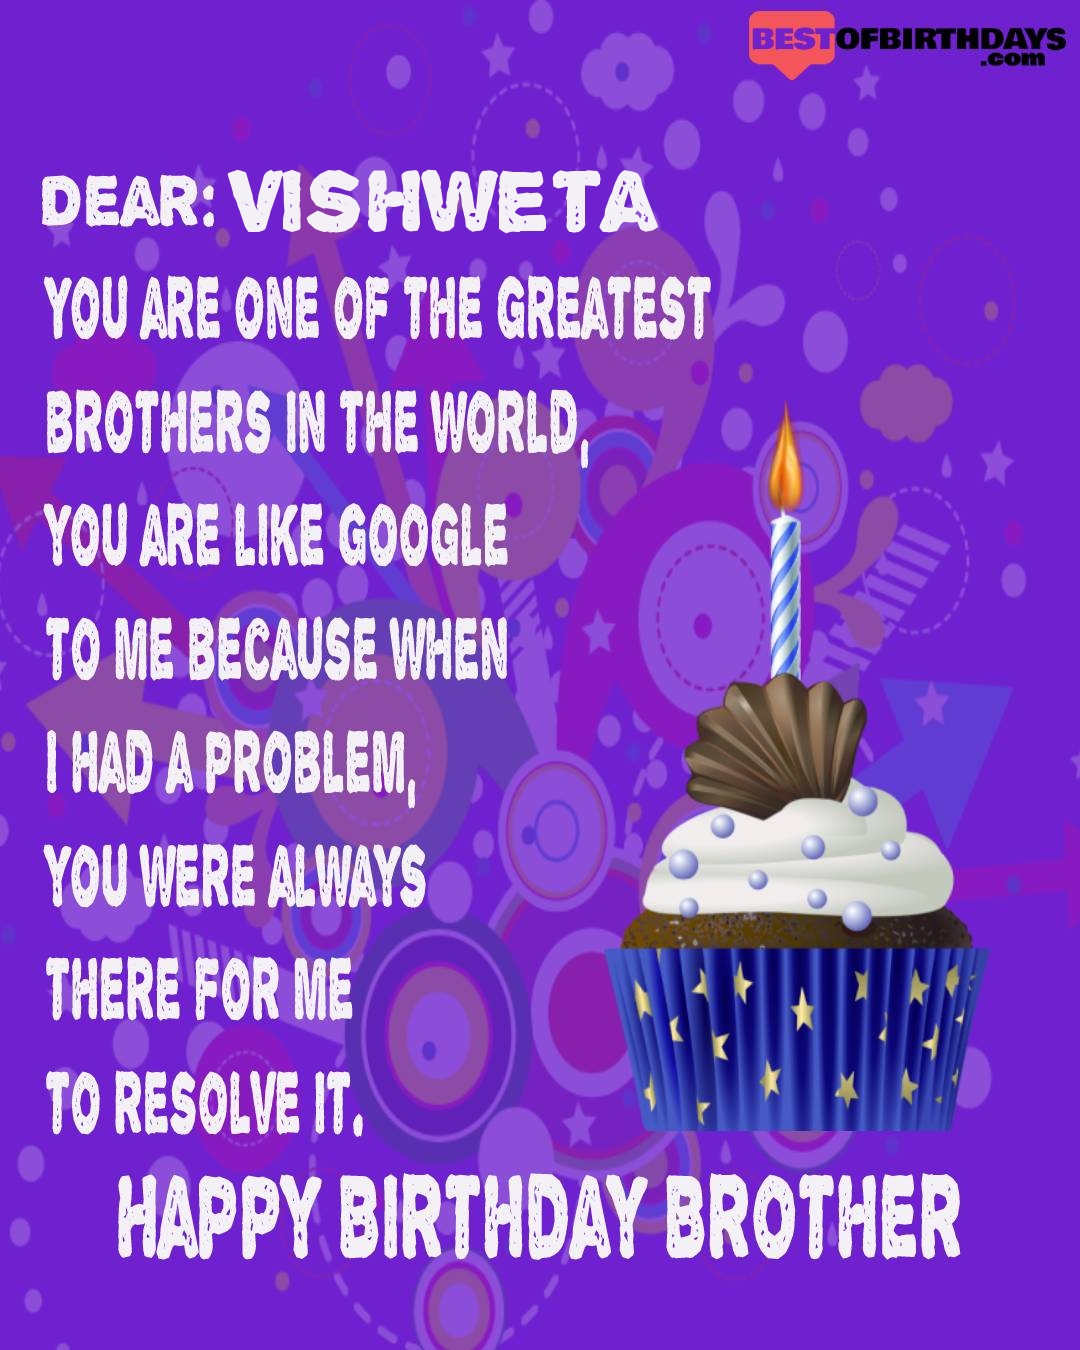 Happy birthday vishweta bhai brother bro